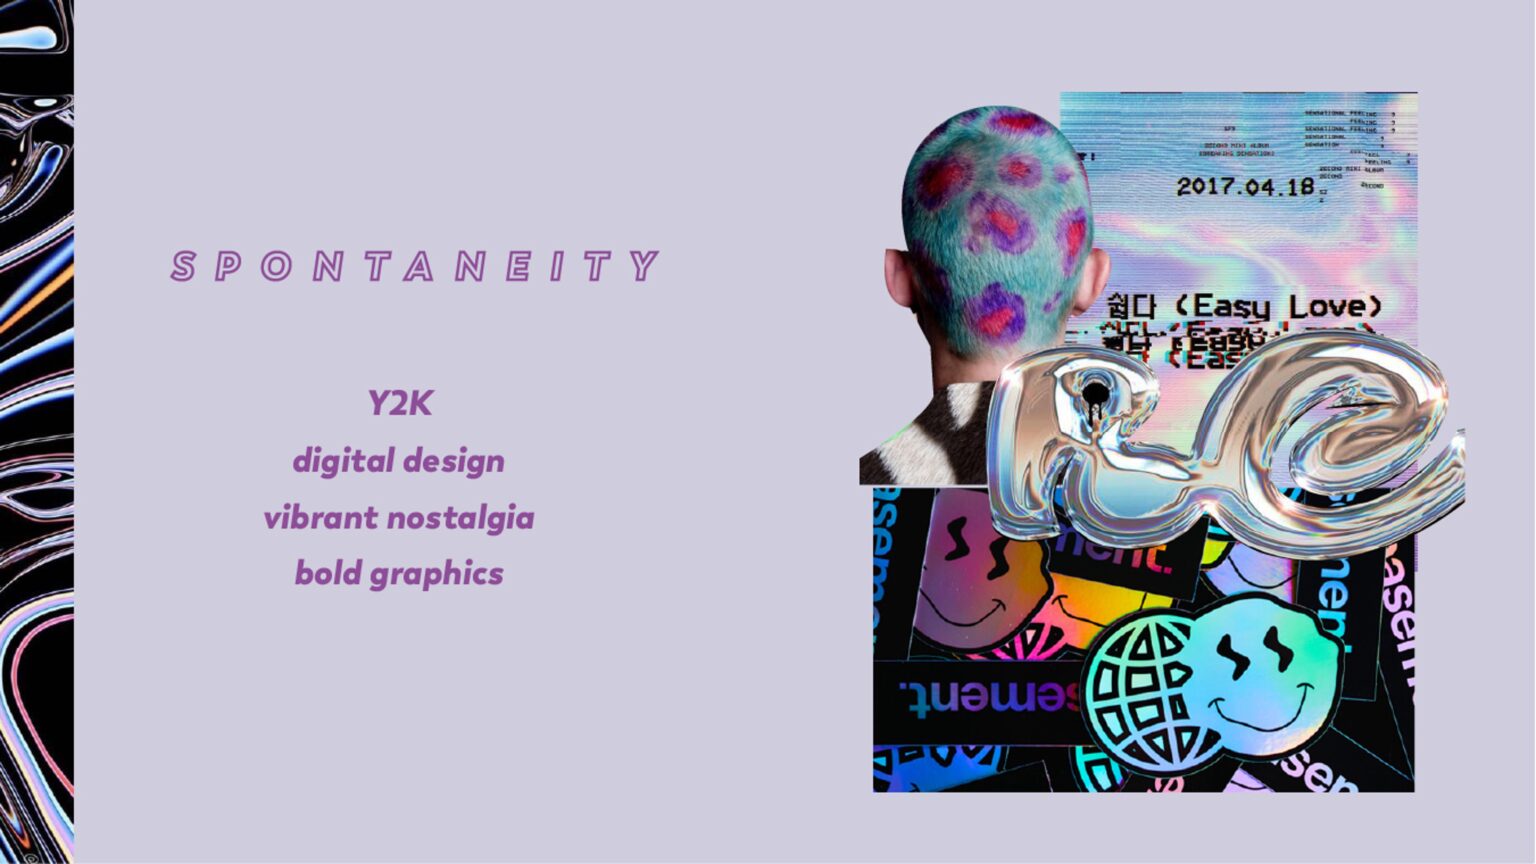 Spontaneity trends: Y2K, digital design, vibrant nostalgia, bold graphics